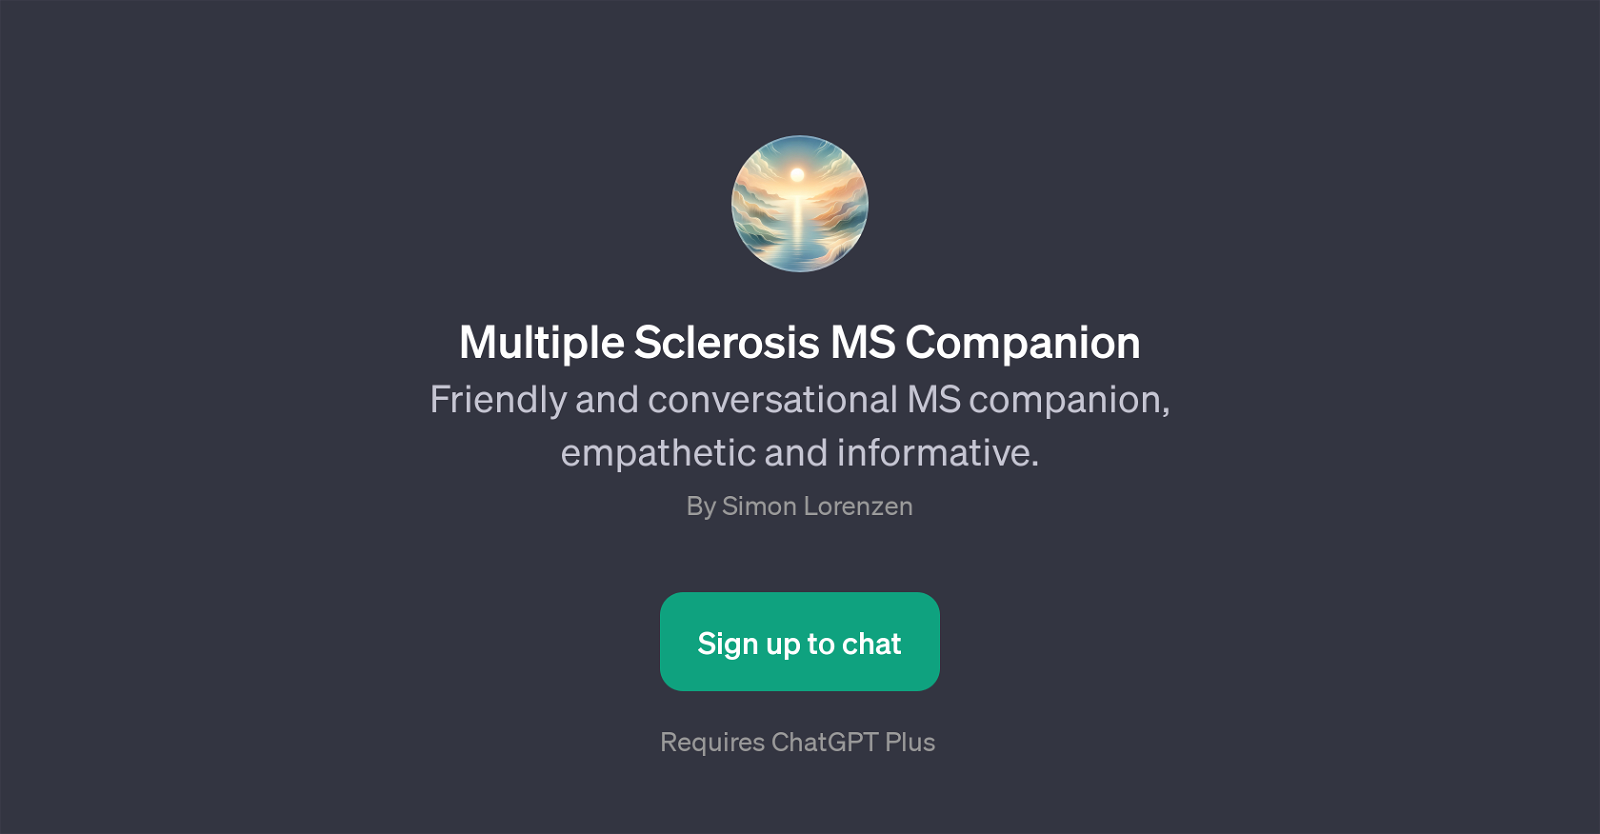 Multiple Sclerosis MS Companion website